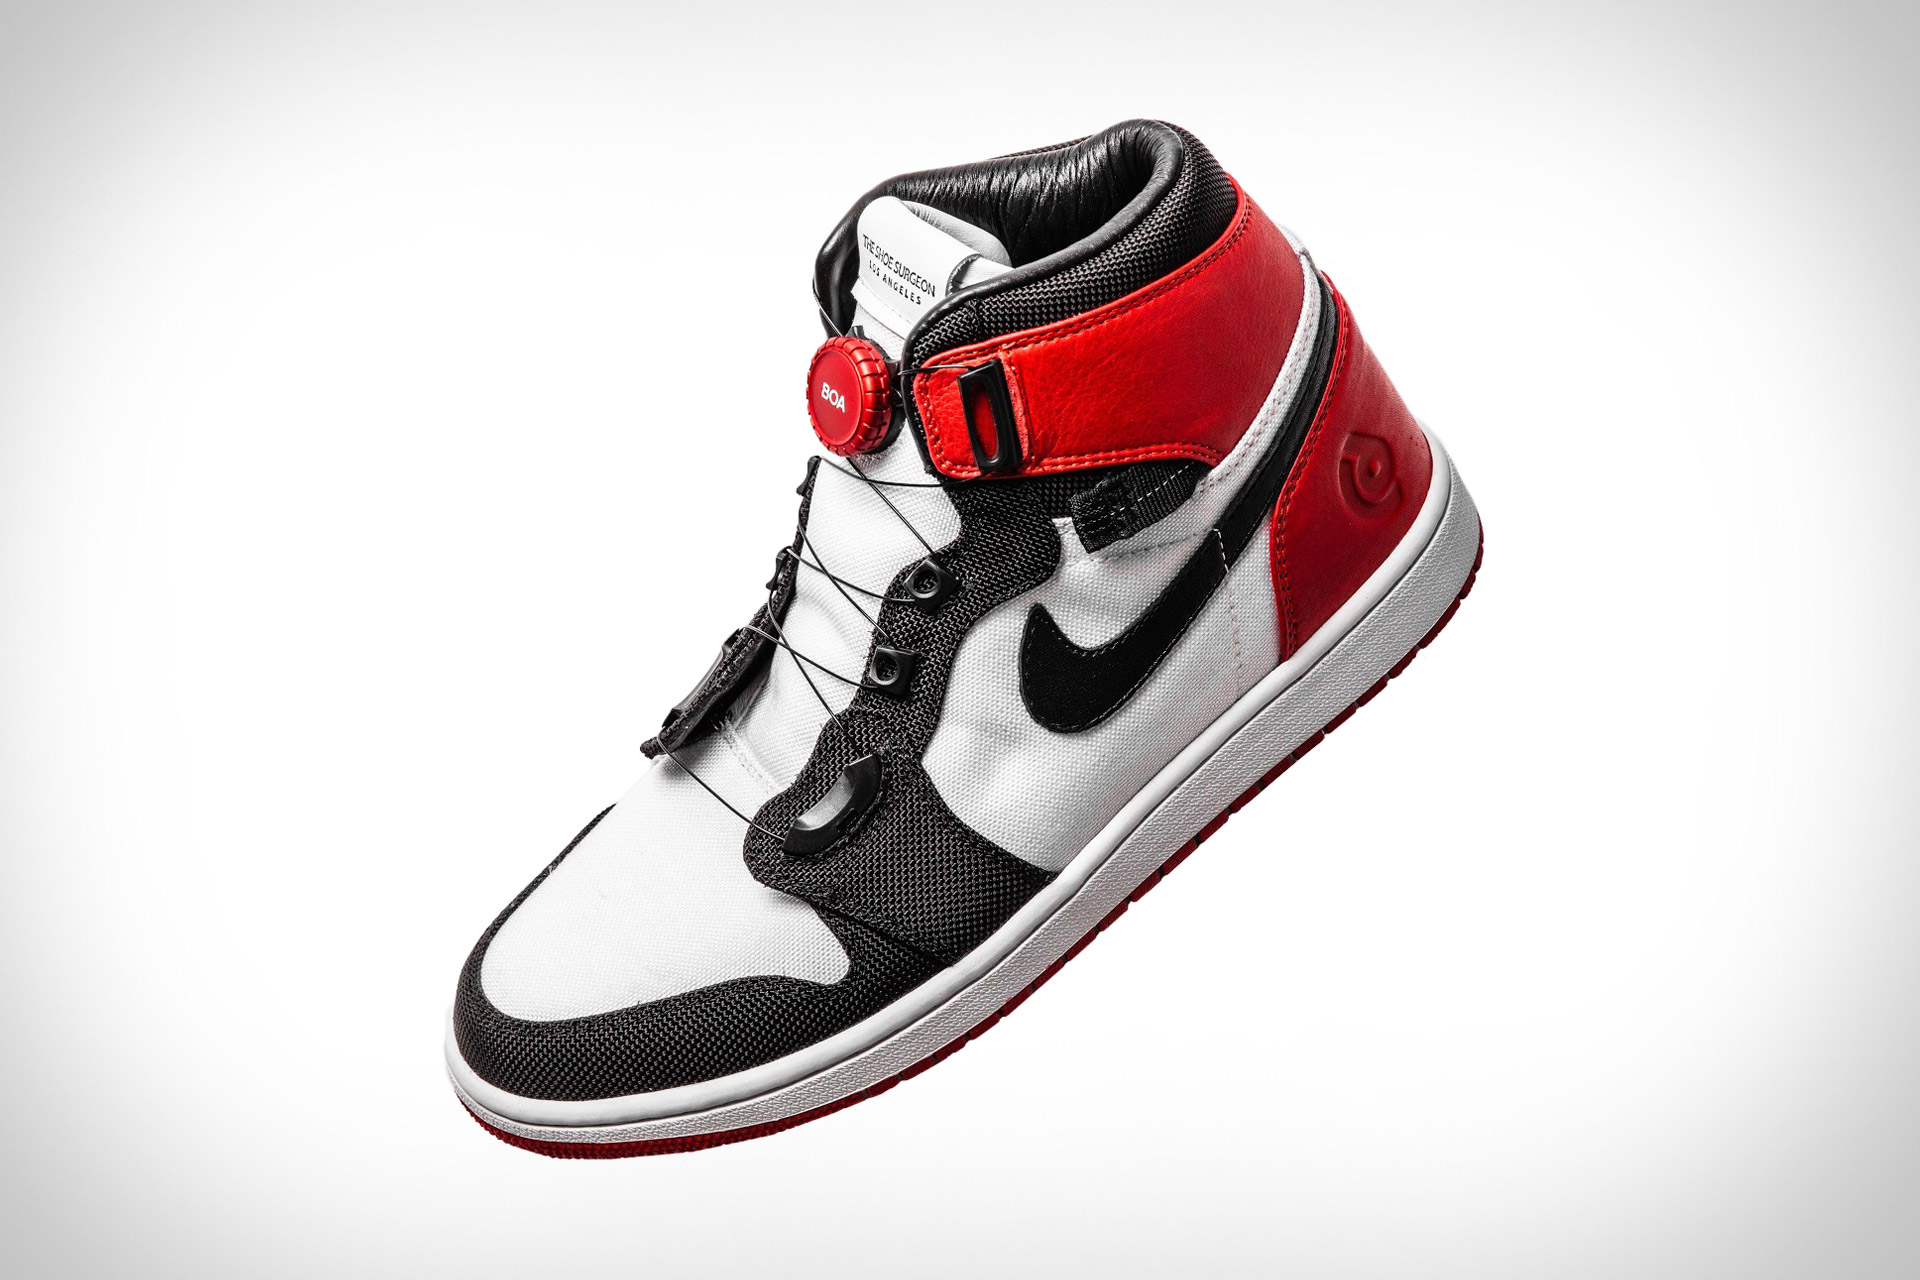 Discommon x The Shoe Surgeon Air Jordan 1 Sneakers | Uncrate